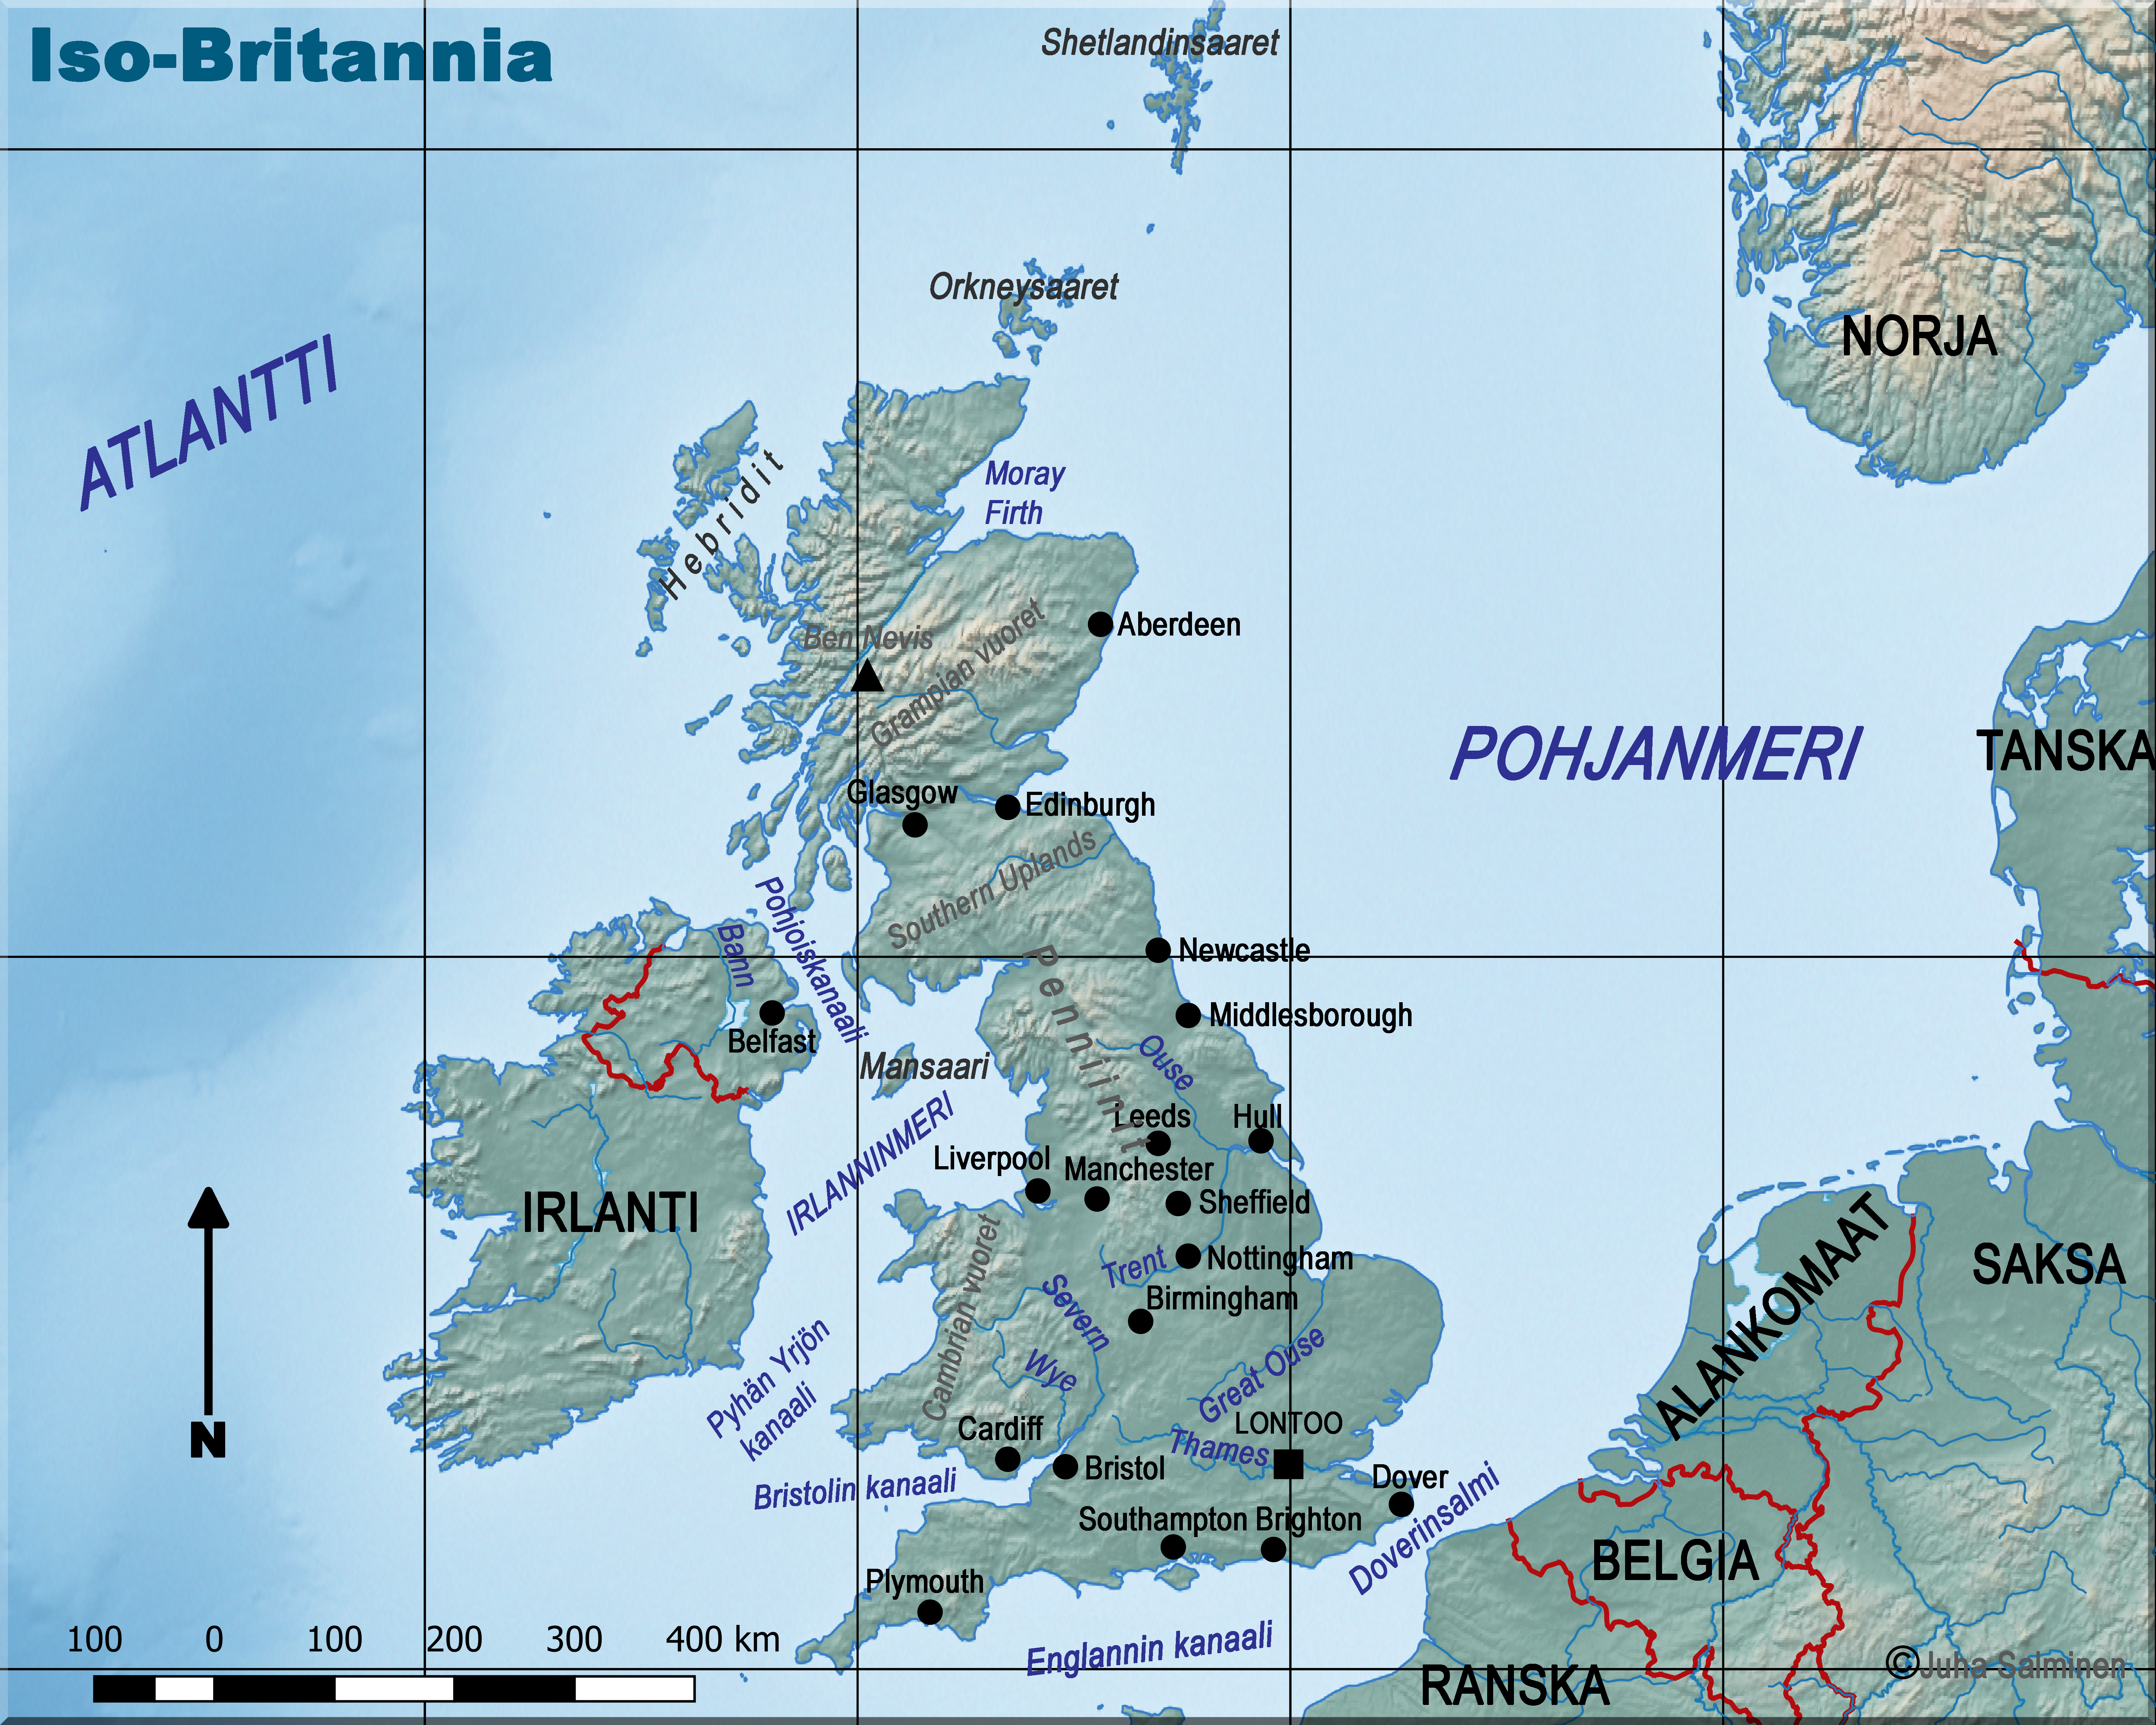 Iso-Britannian kartta